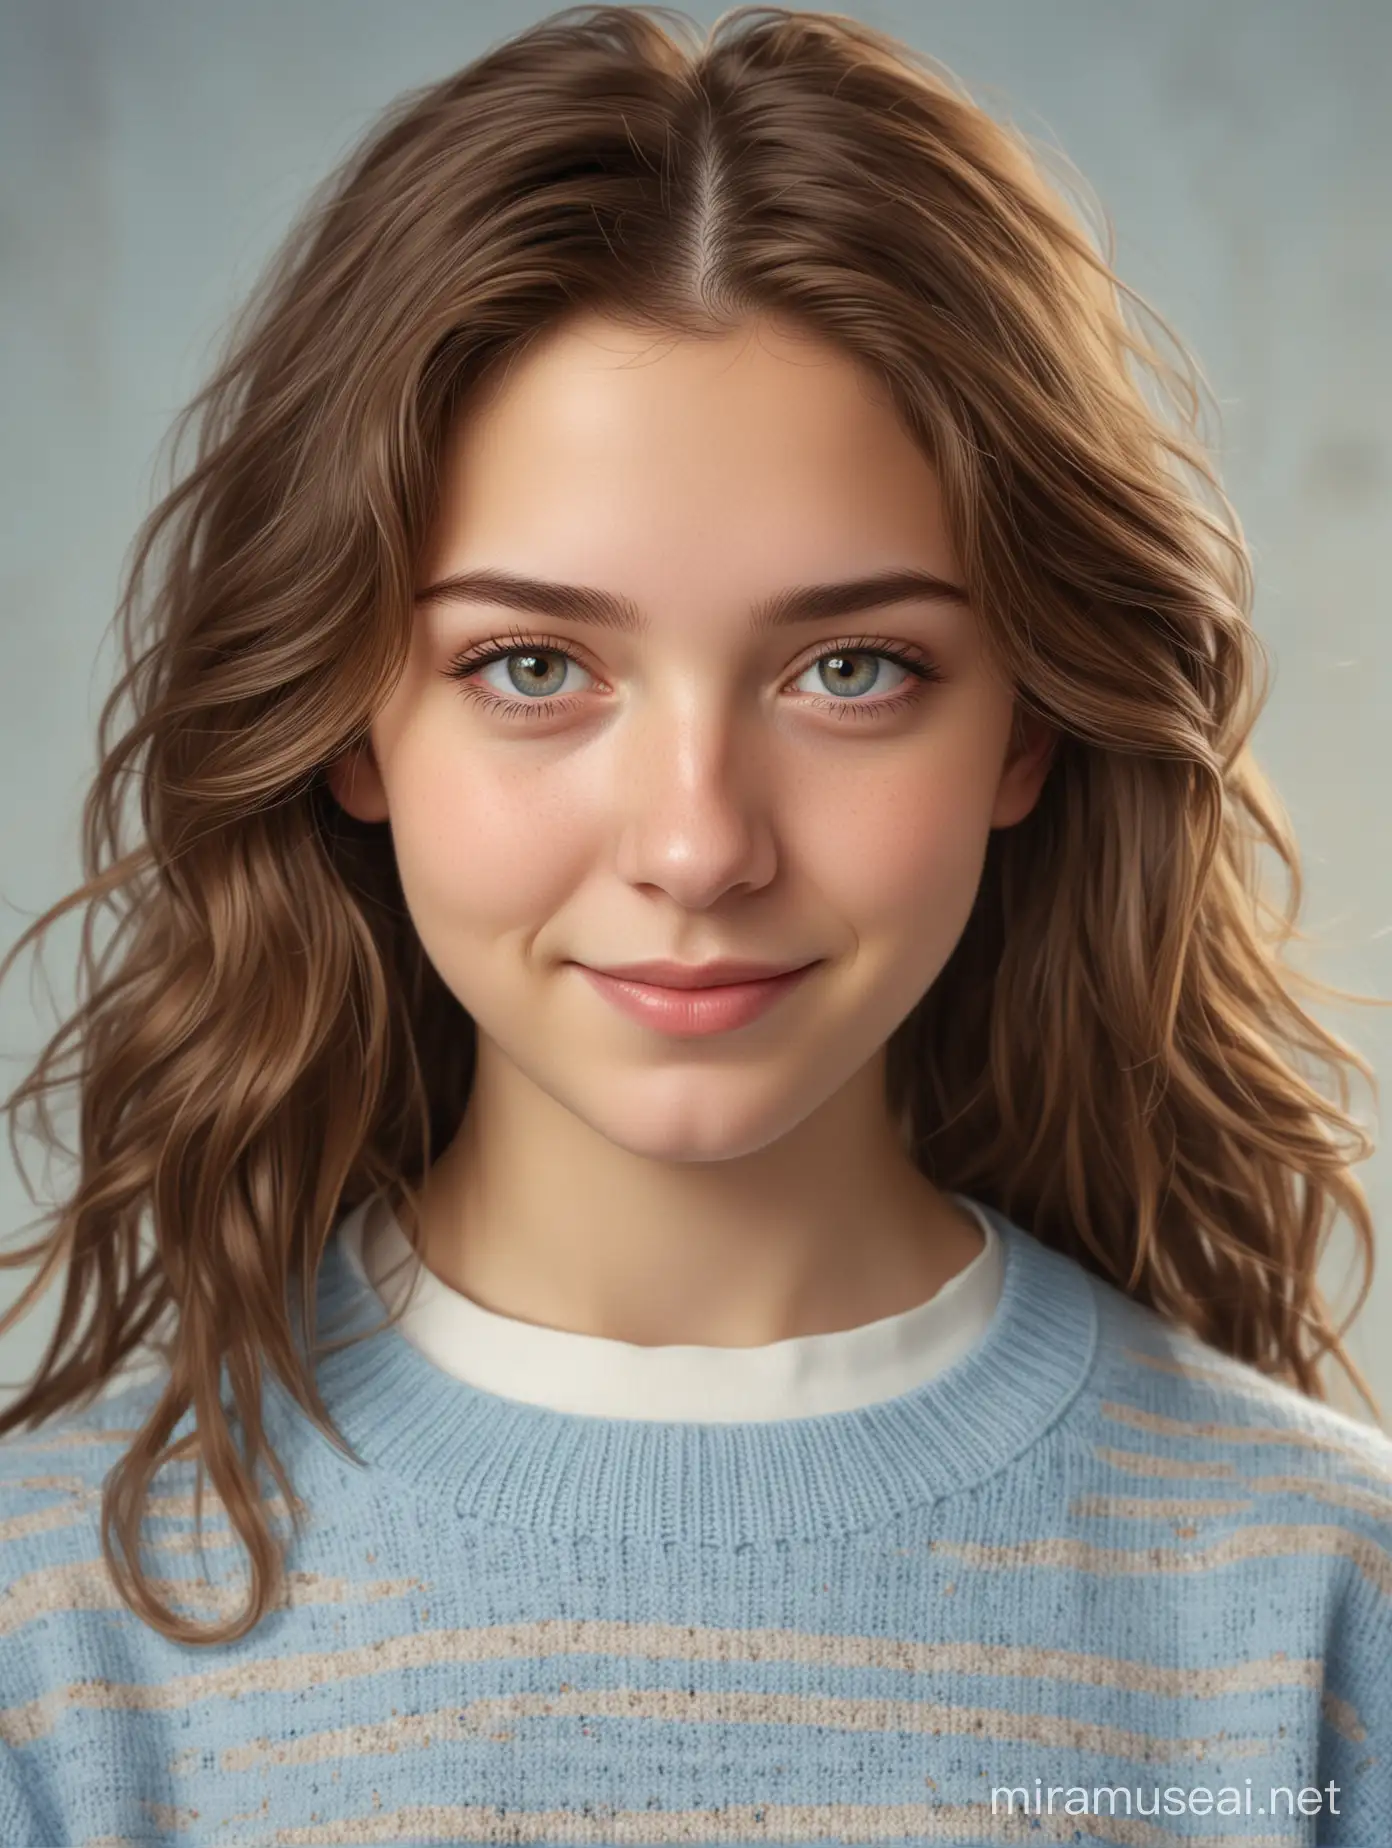 Serene Teenage Girl Portrait with Medium Wavy Brown Hair in Soft Blue Sweater